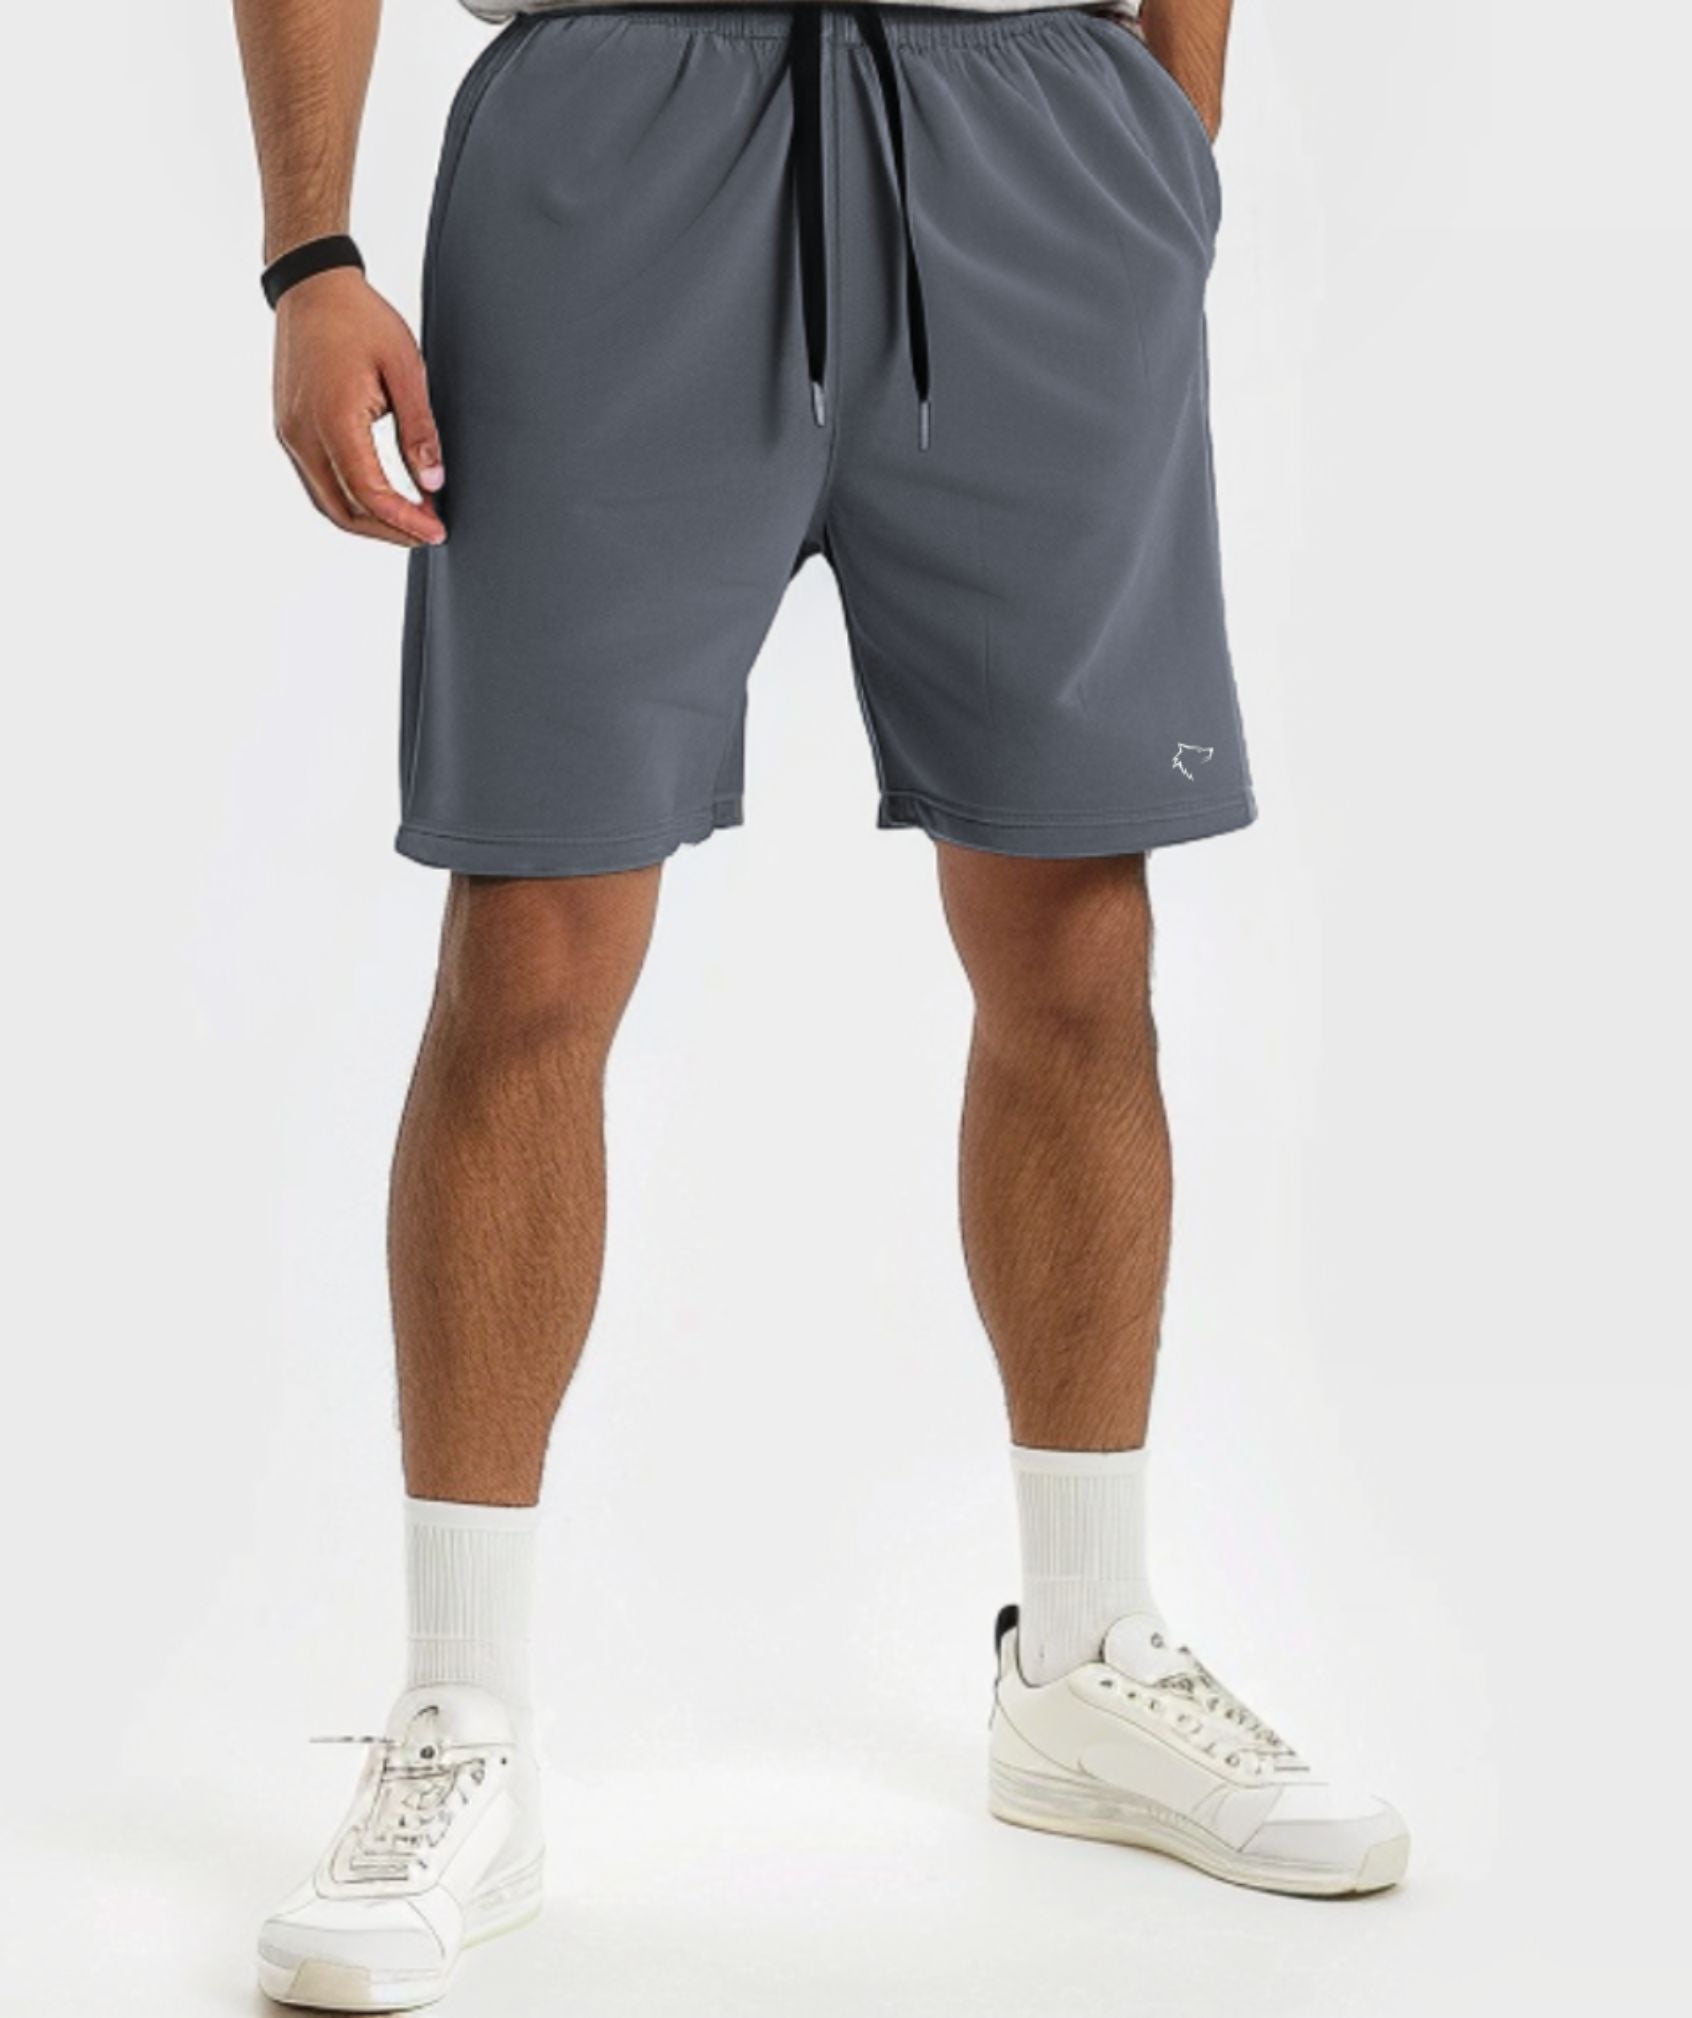 Apex™ gray Pinnacle Shorts front view - eco-friendly and durable shorts